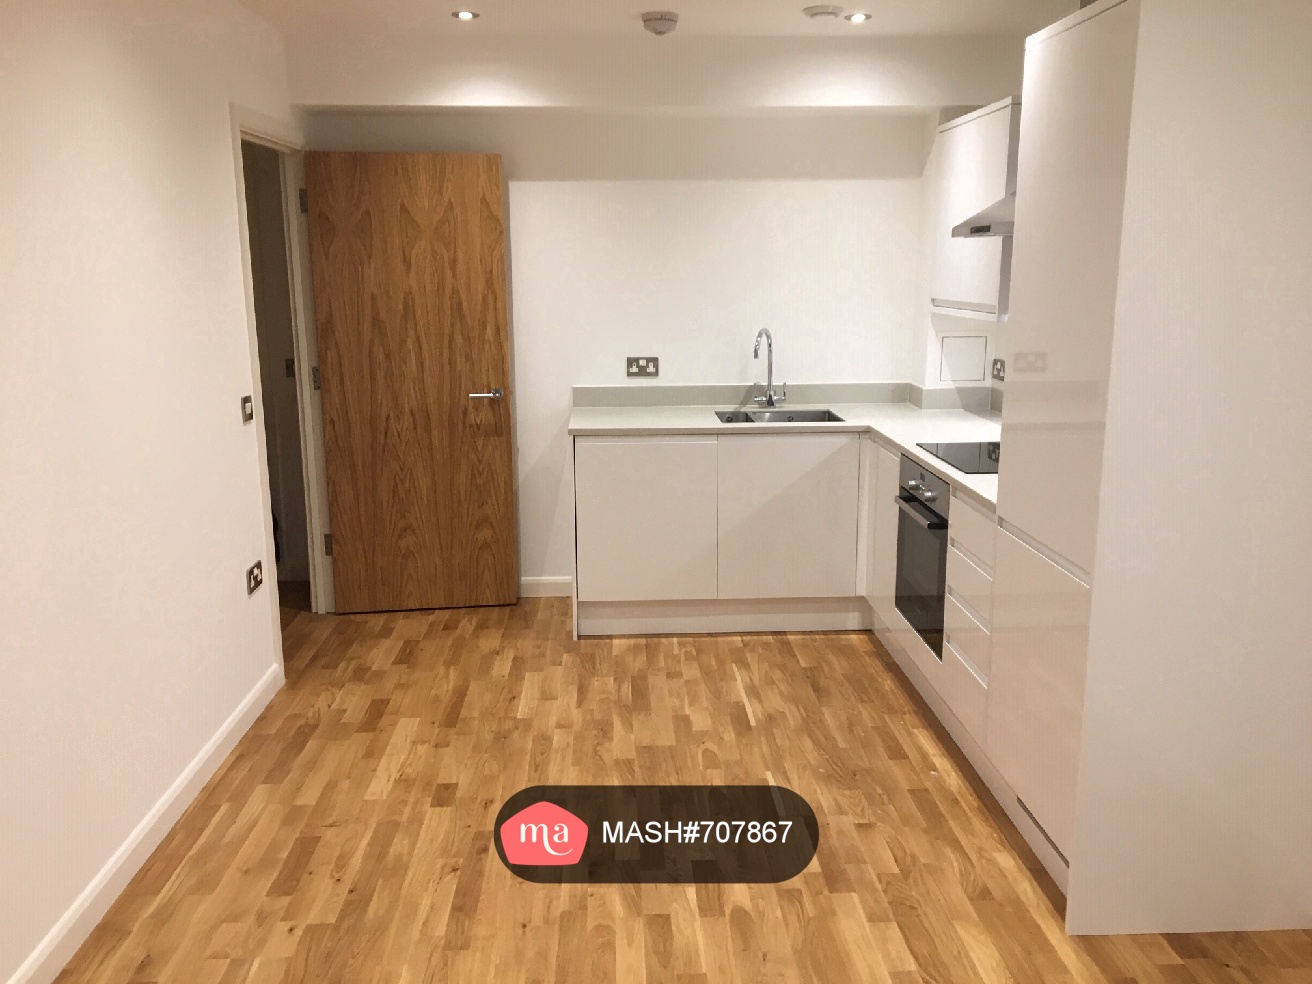 1 Bedroom Flat to rent in Croydon - Mashroom